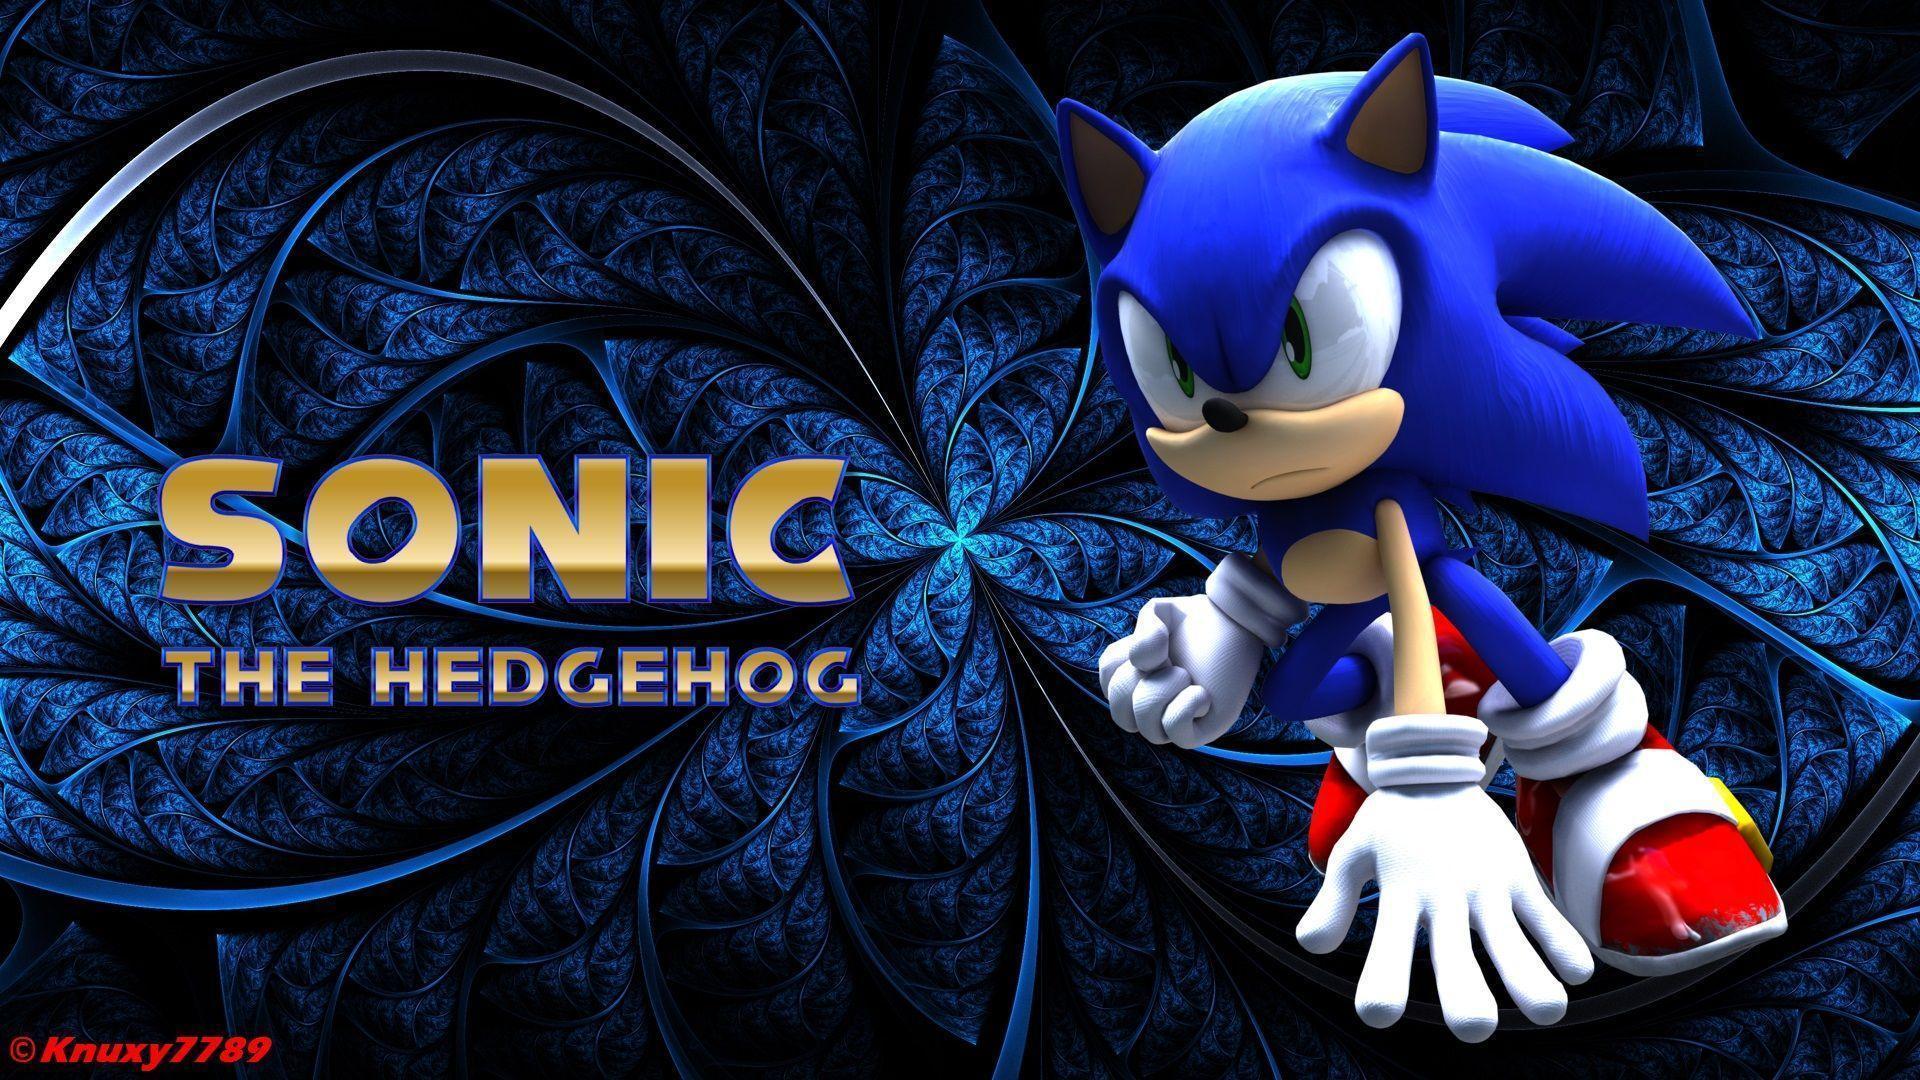 Classic Sonic The Hedgehog Wallpaper Hd Pic Focus